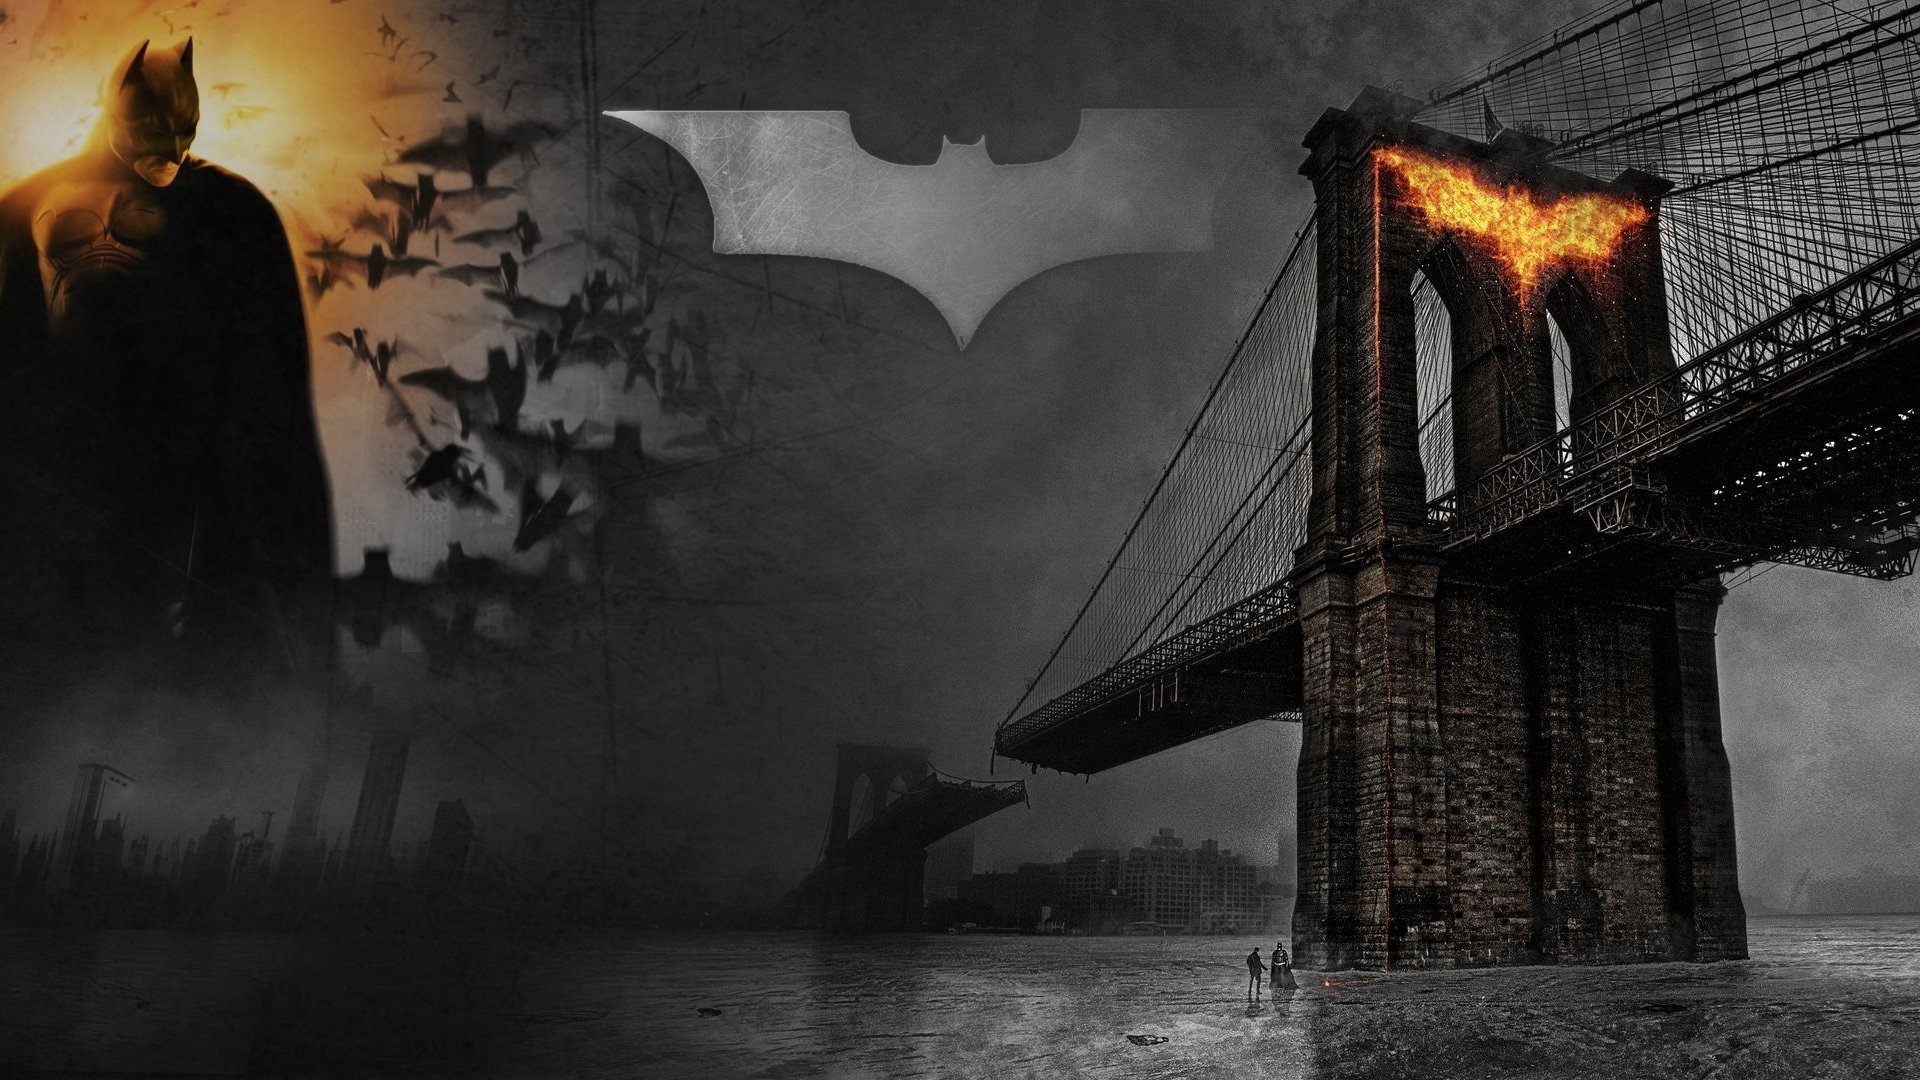 Batman Begins Image - ID: 31052 - Image Abyss